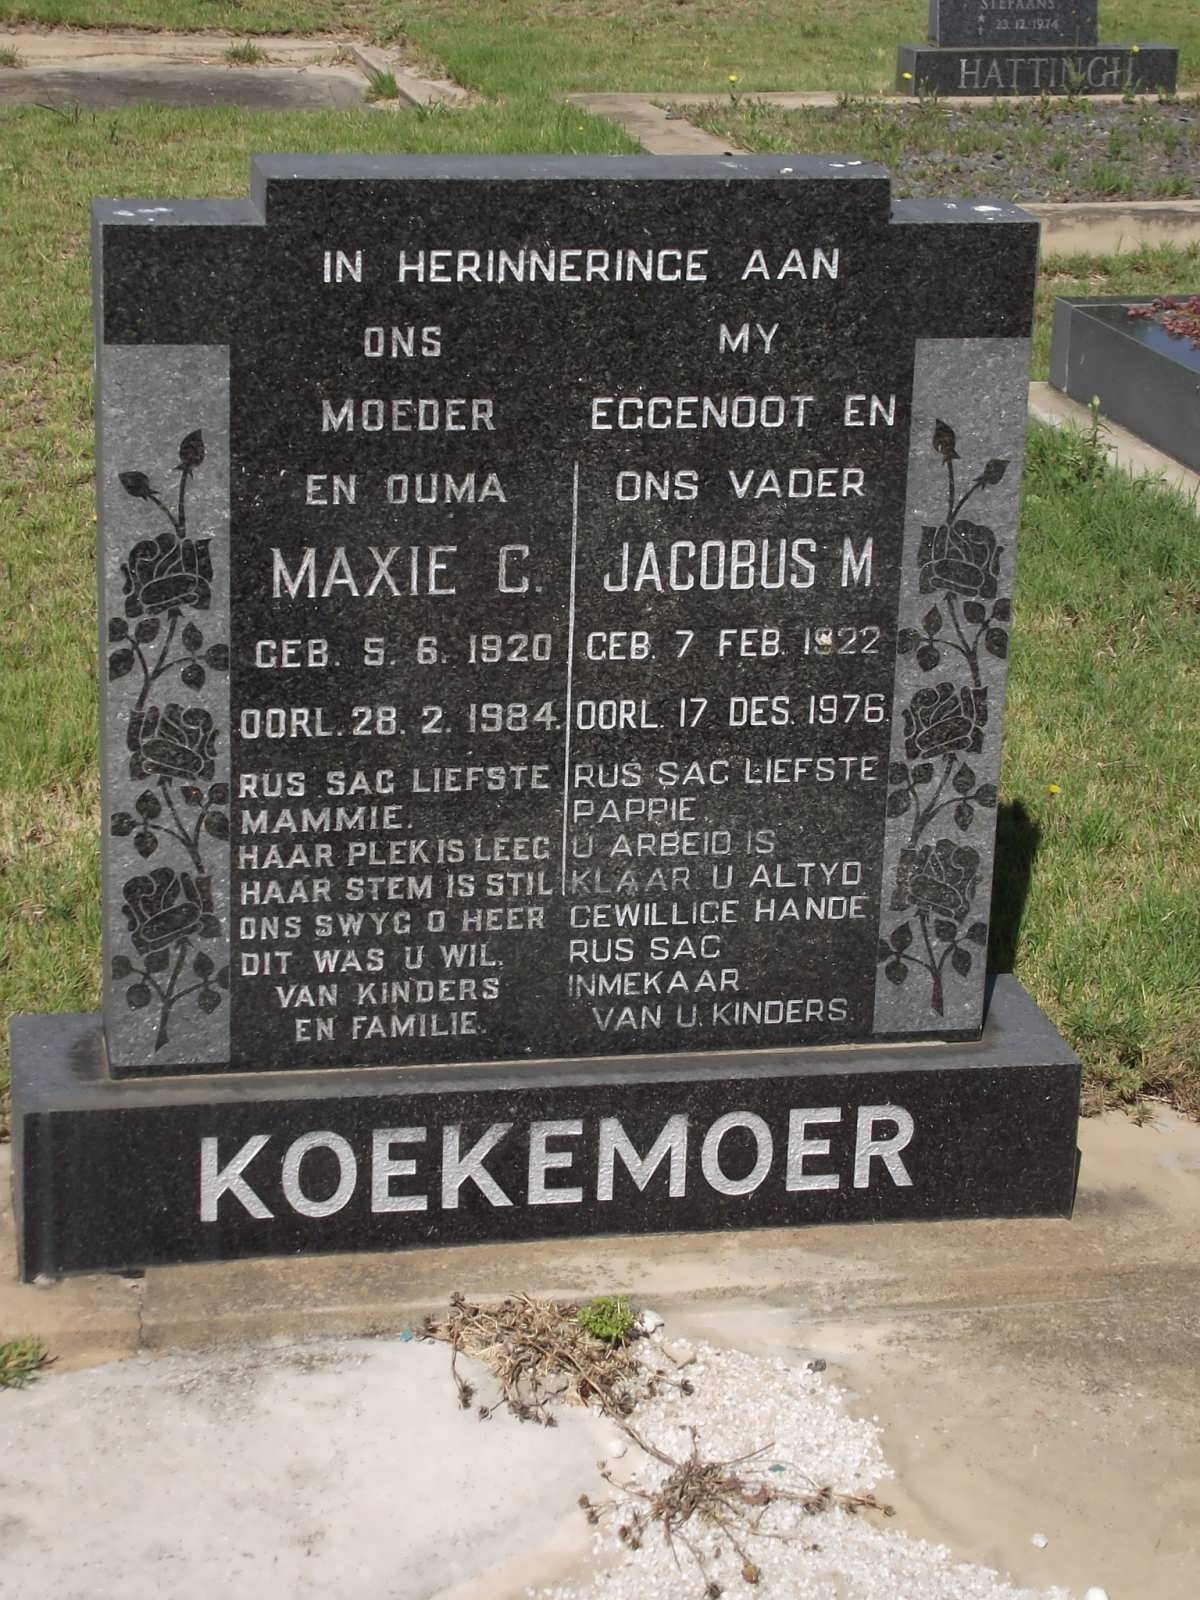 KOEKEMOER Maxie C. 1920-1984 & Jacobus M. 1922-1976